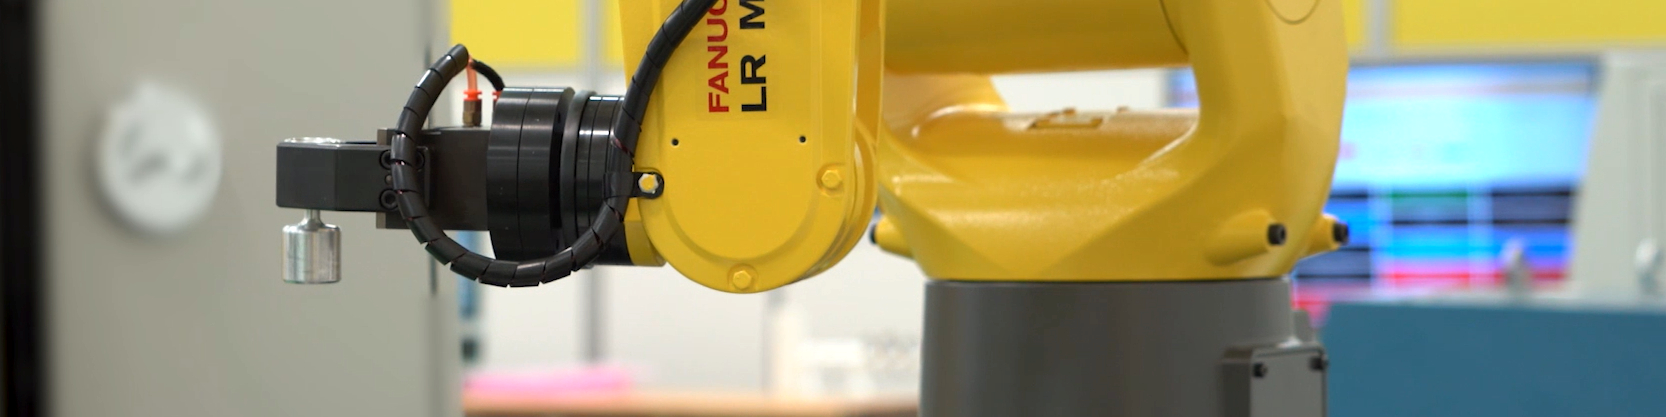 Fanuc America robot programming via CNC